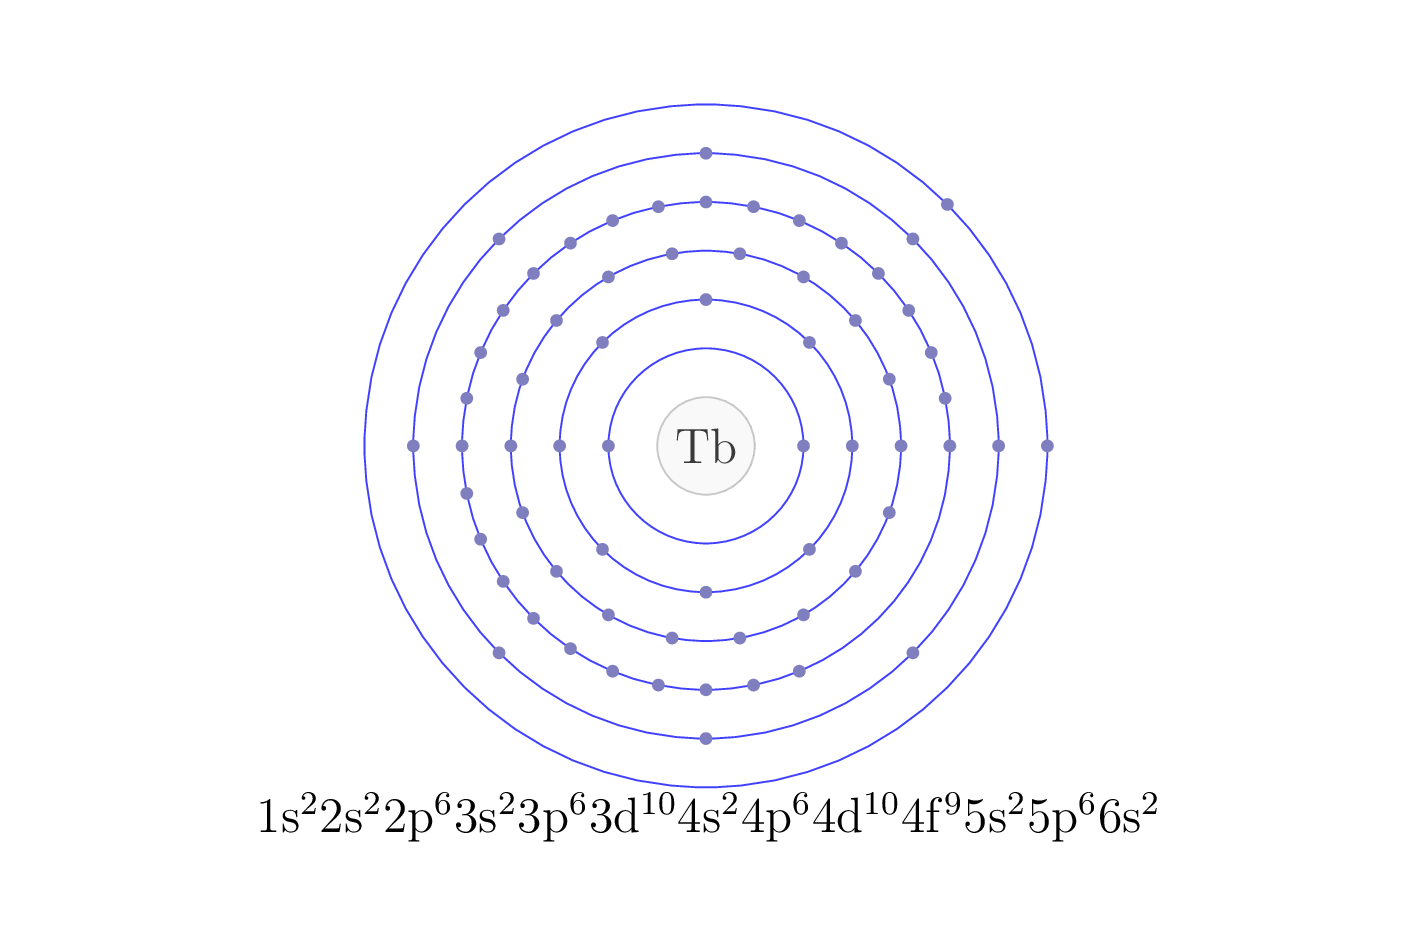 electron configuration of element Tb